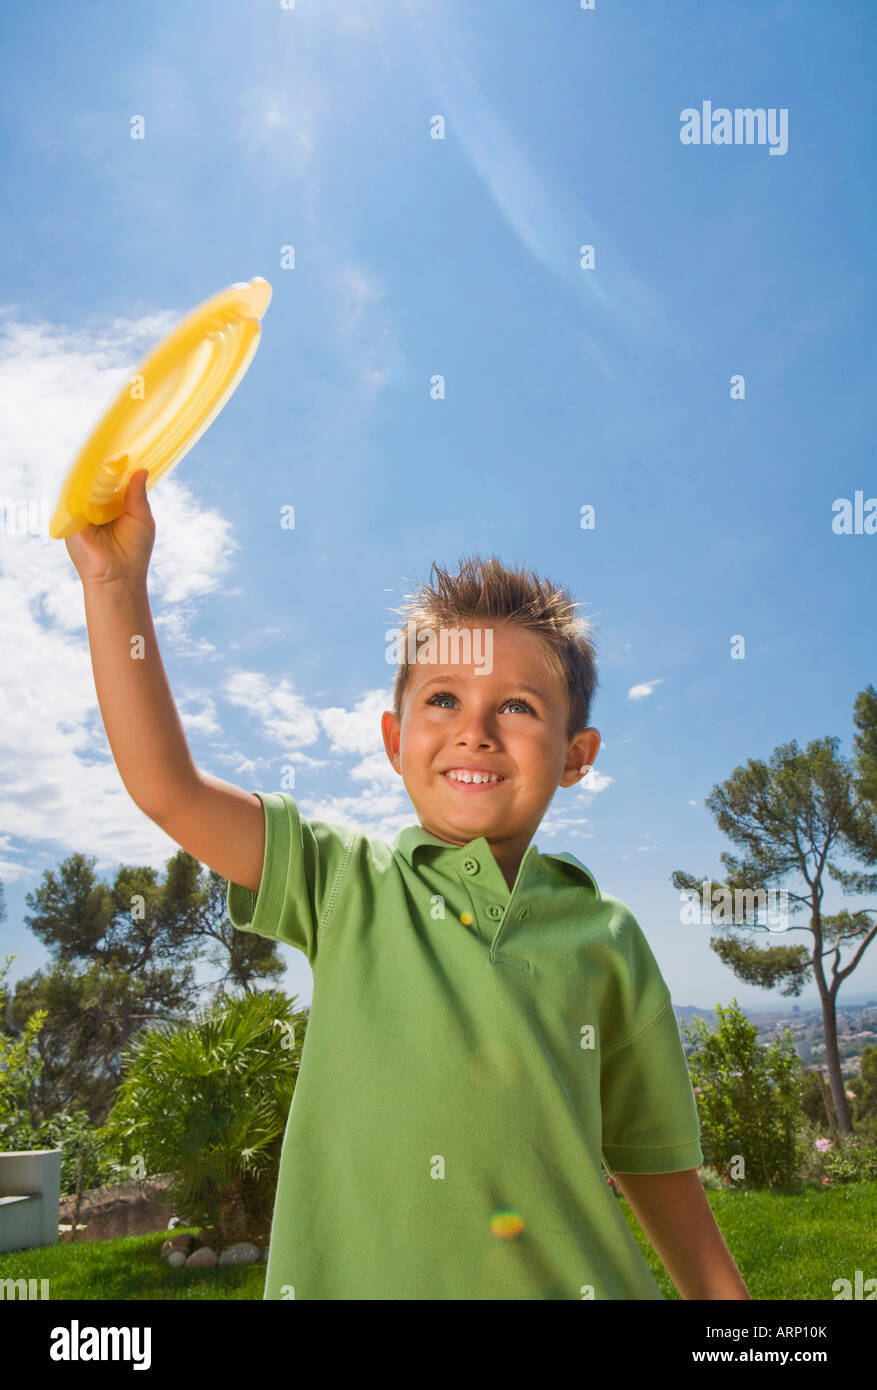 Frisbee Boy holding Banque D'Images